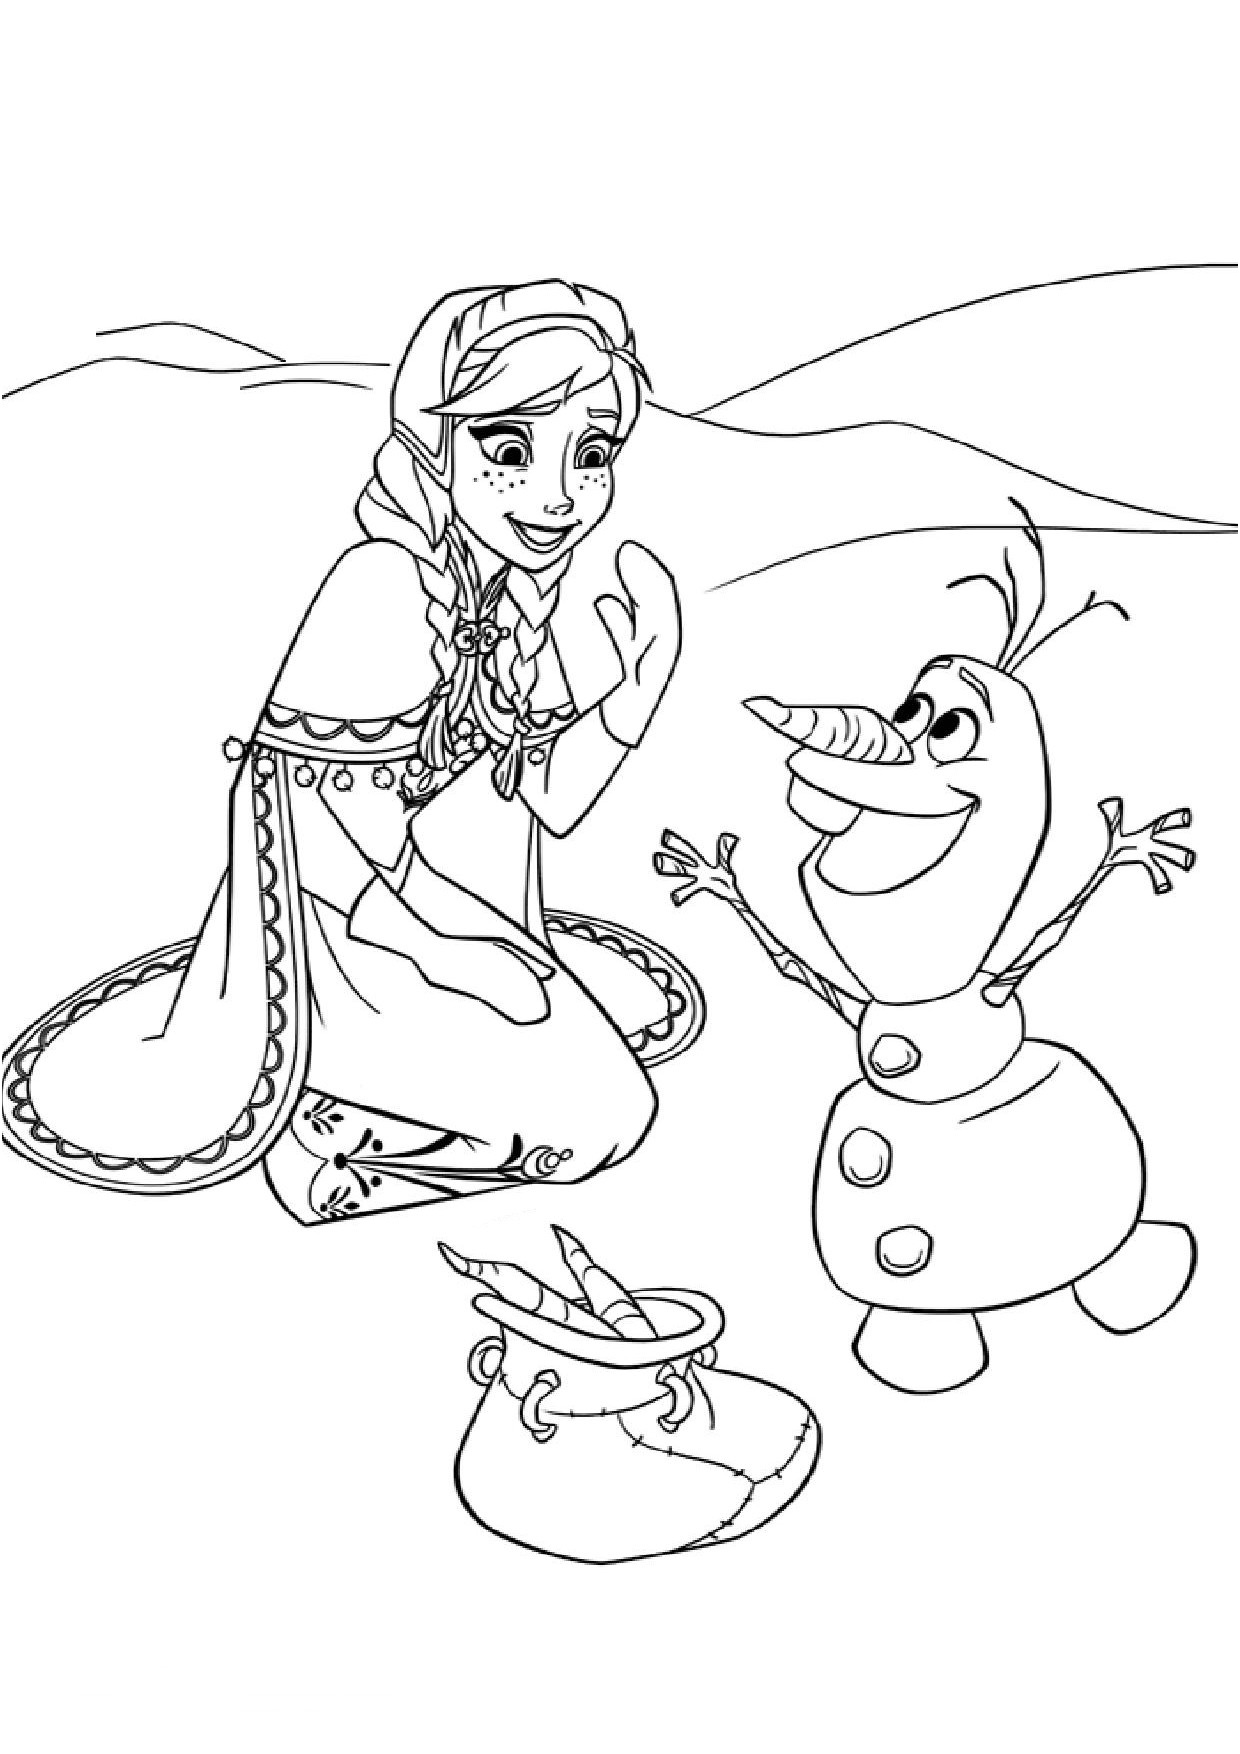 hugo l escargot coloriage a dessiner reine des neiges